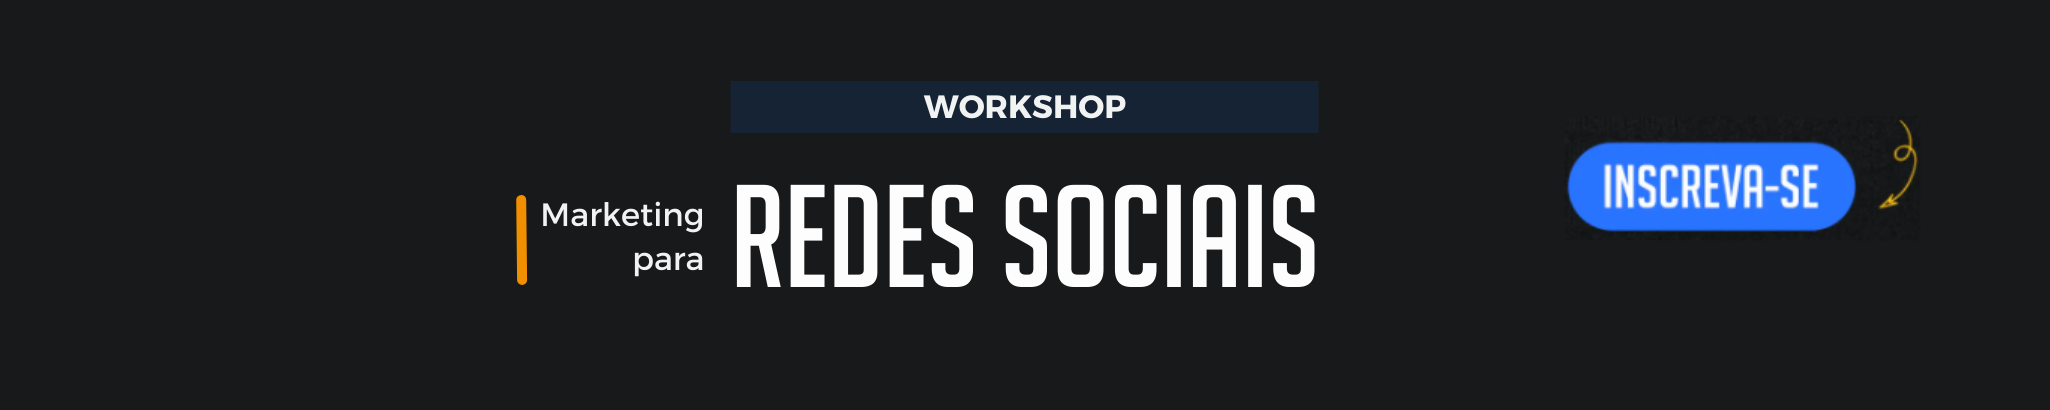 Workshop Marketing para Redes Sociais